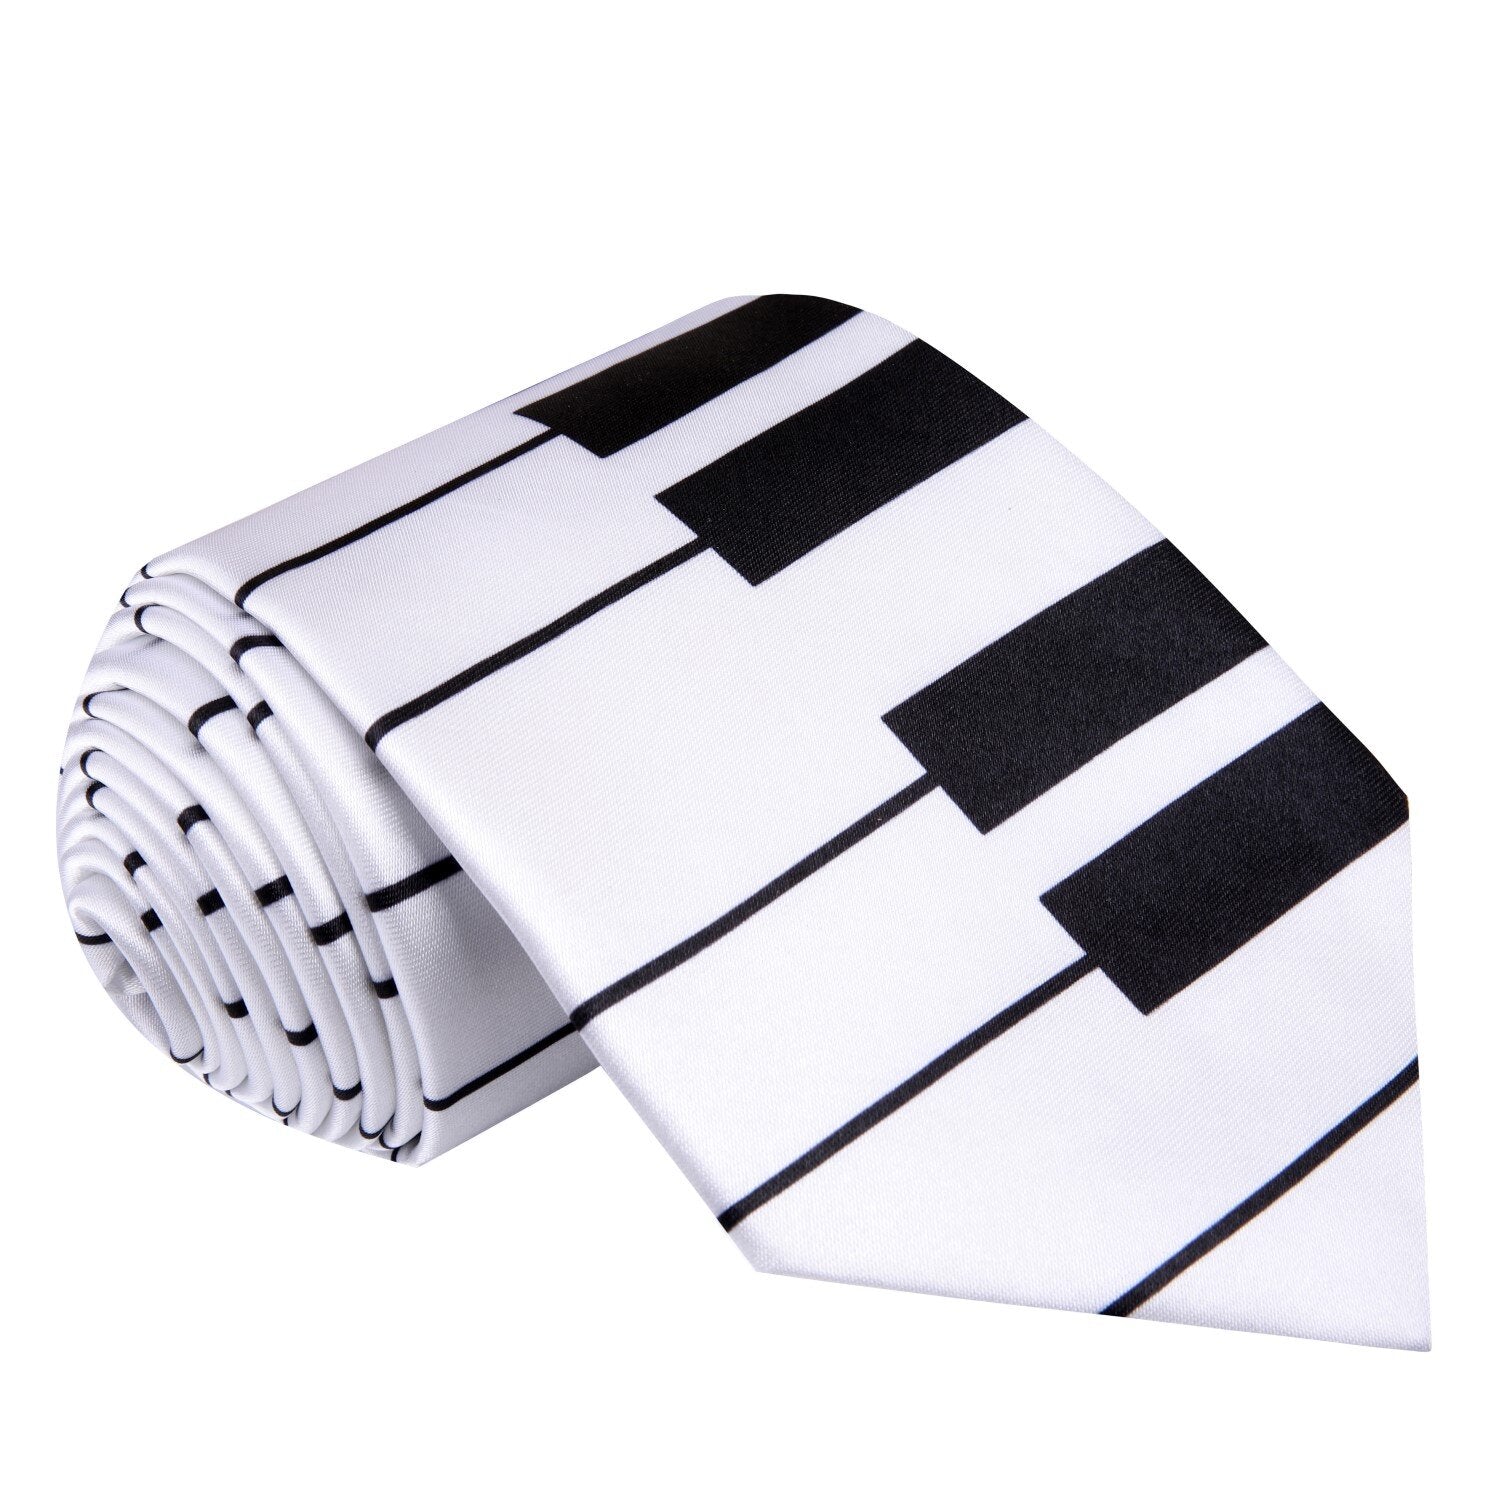 Black, White Keyboard Tie and Pocket SquareBlack, White Keyboard Tie and Pocket Square